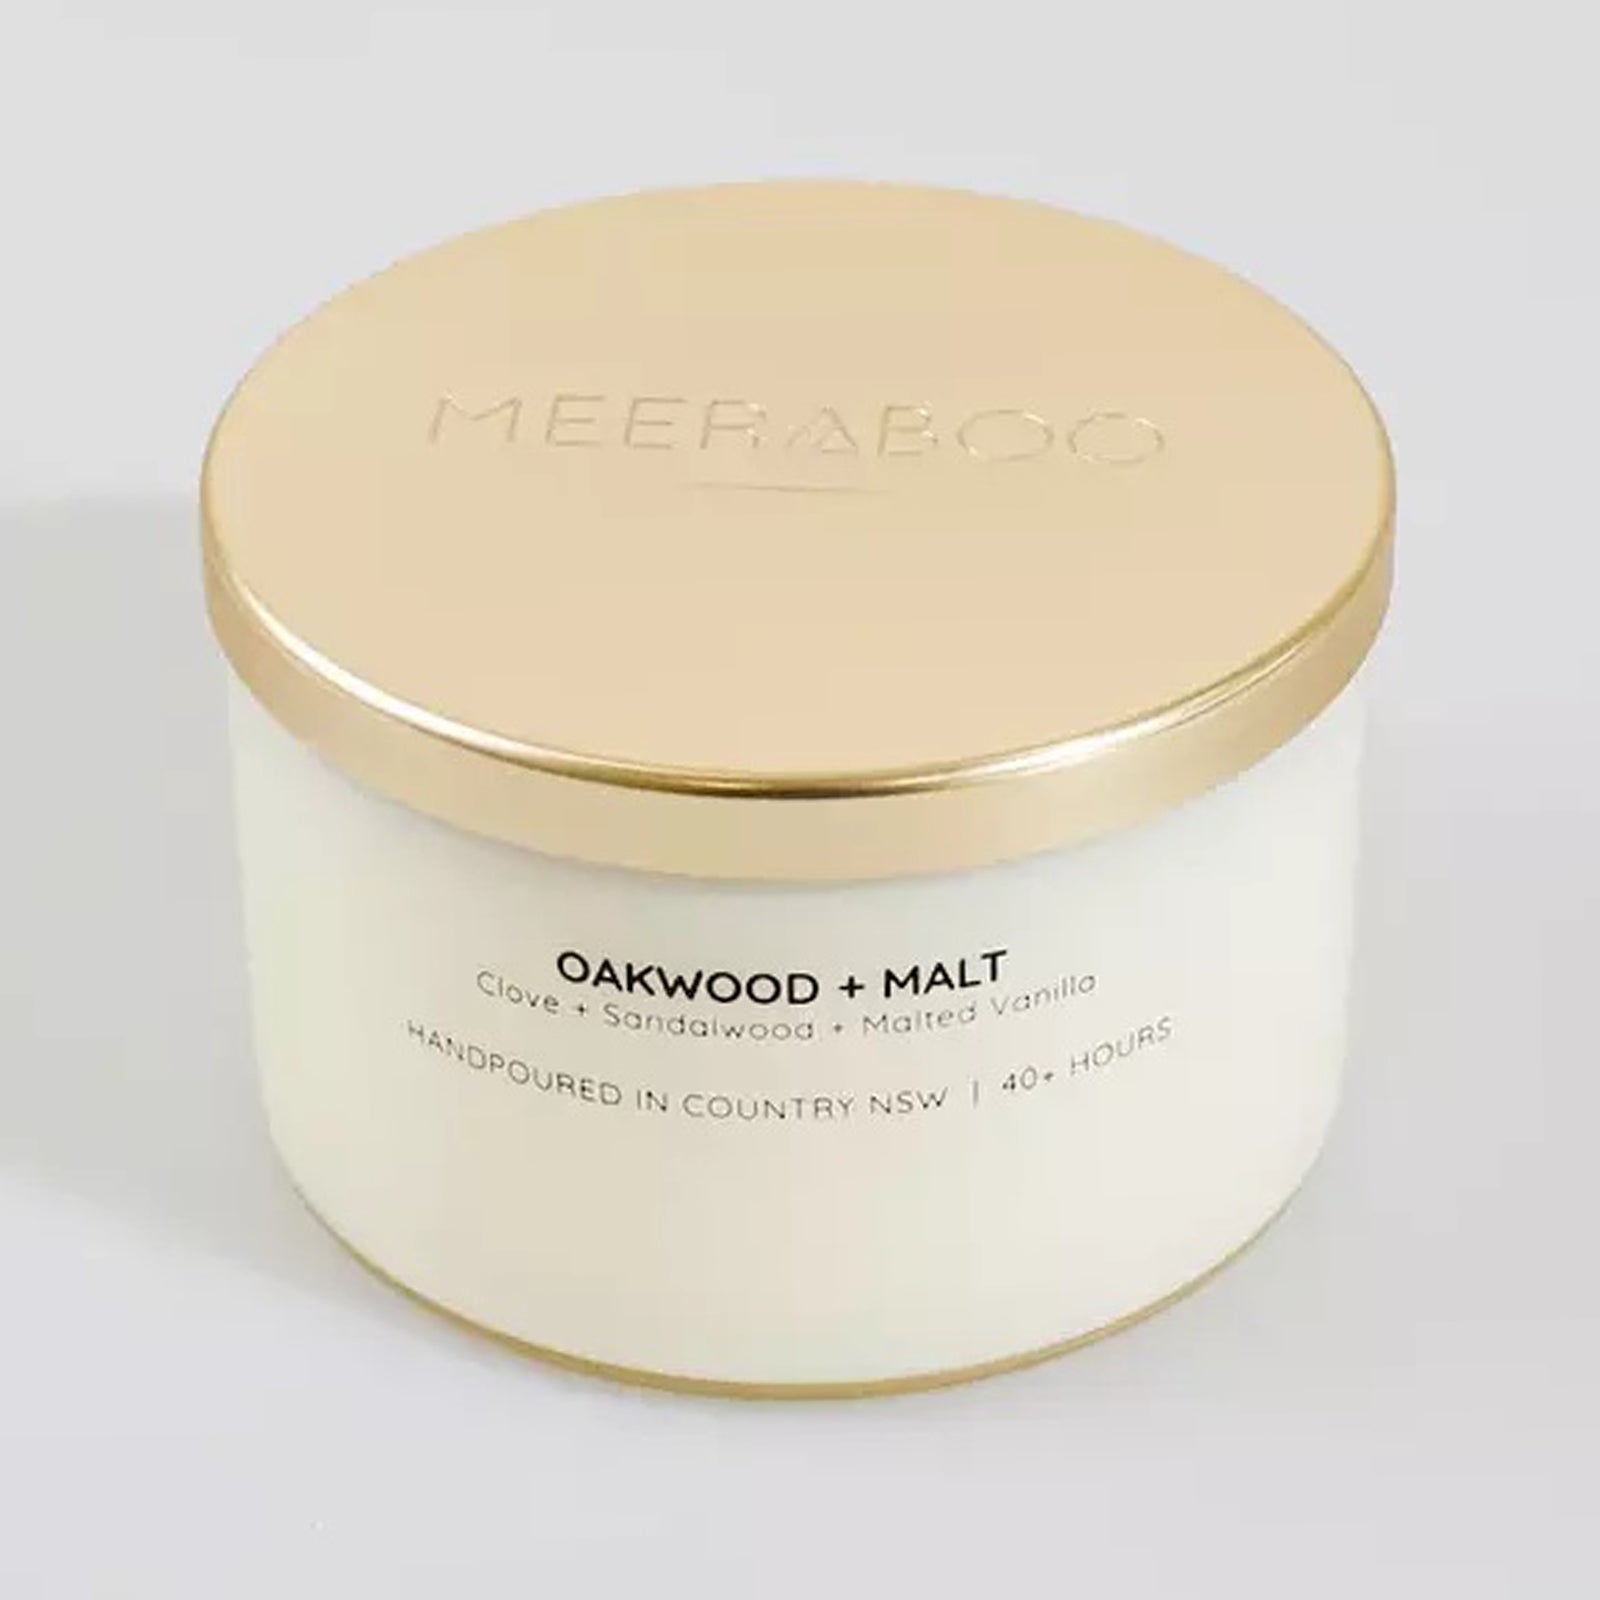 100% Natural Soy Wax "Oakwood & Malt" Candle from Australia (330g) - Horizon Farms